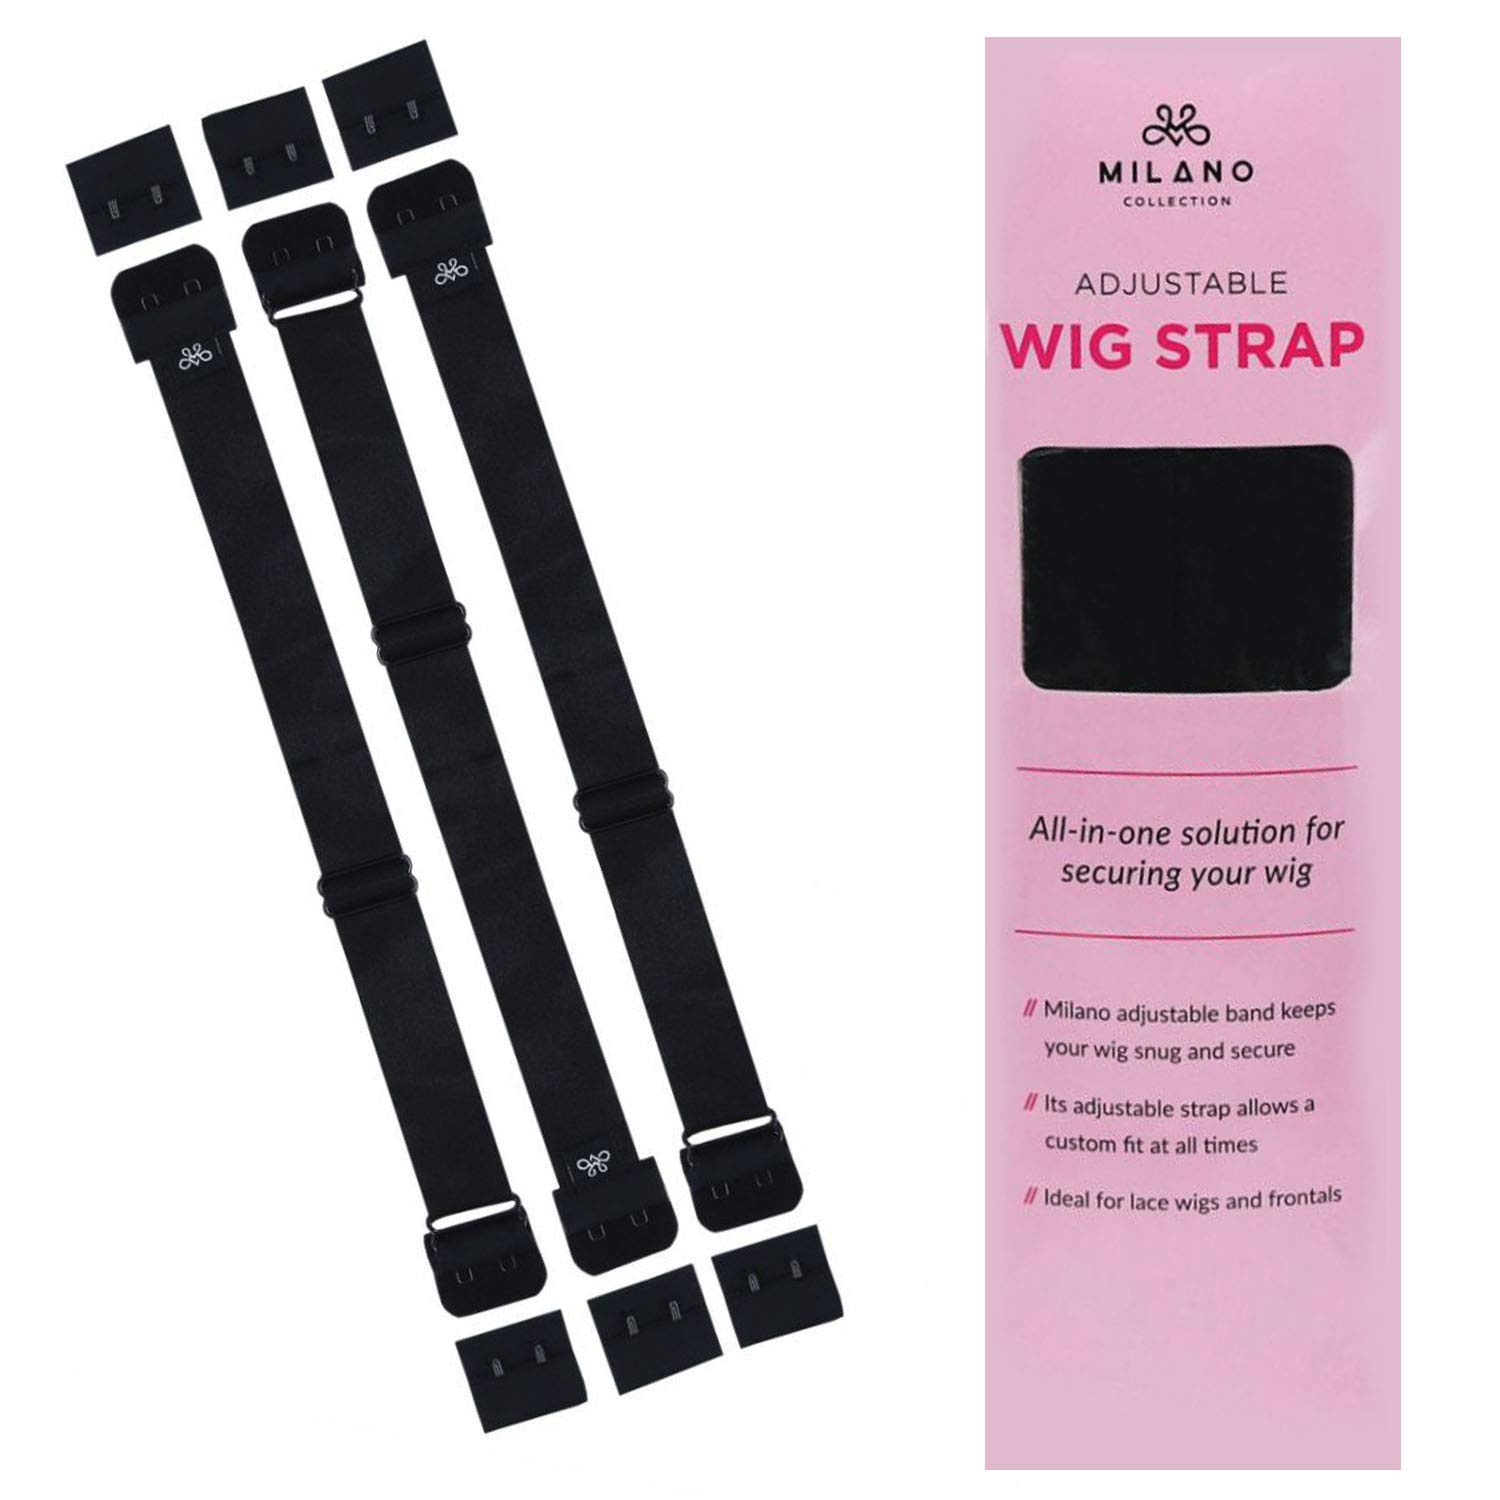 Milano Collection ORIGINAL WiGrip Wig Comfort Band 2-Pack Black 